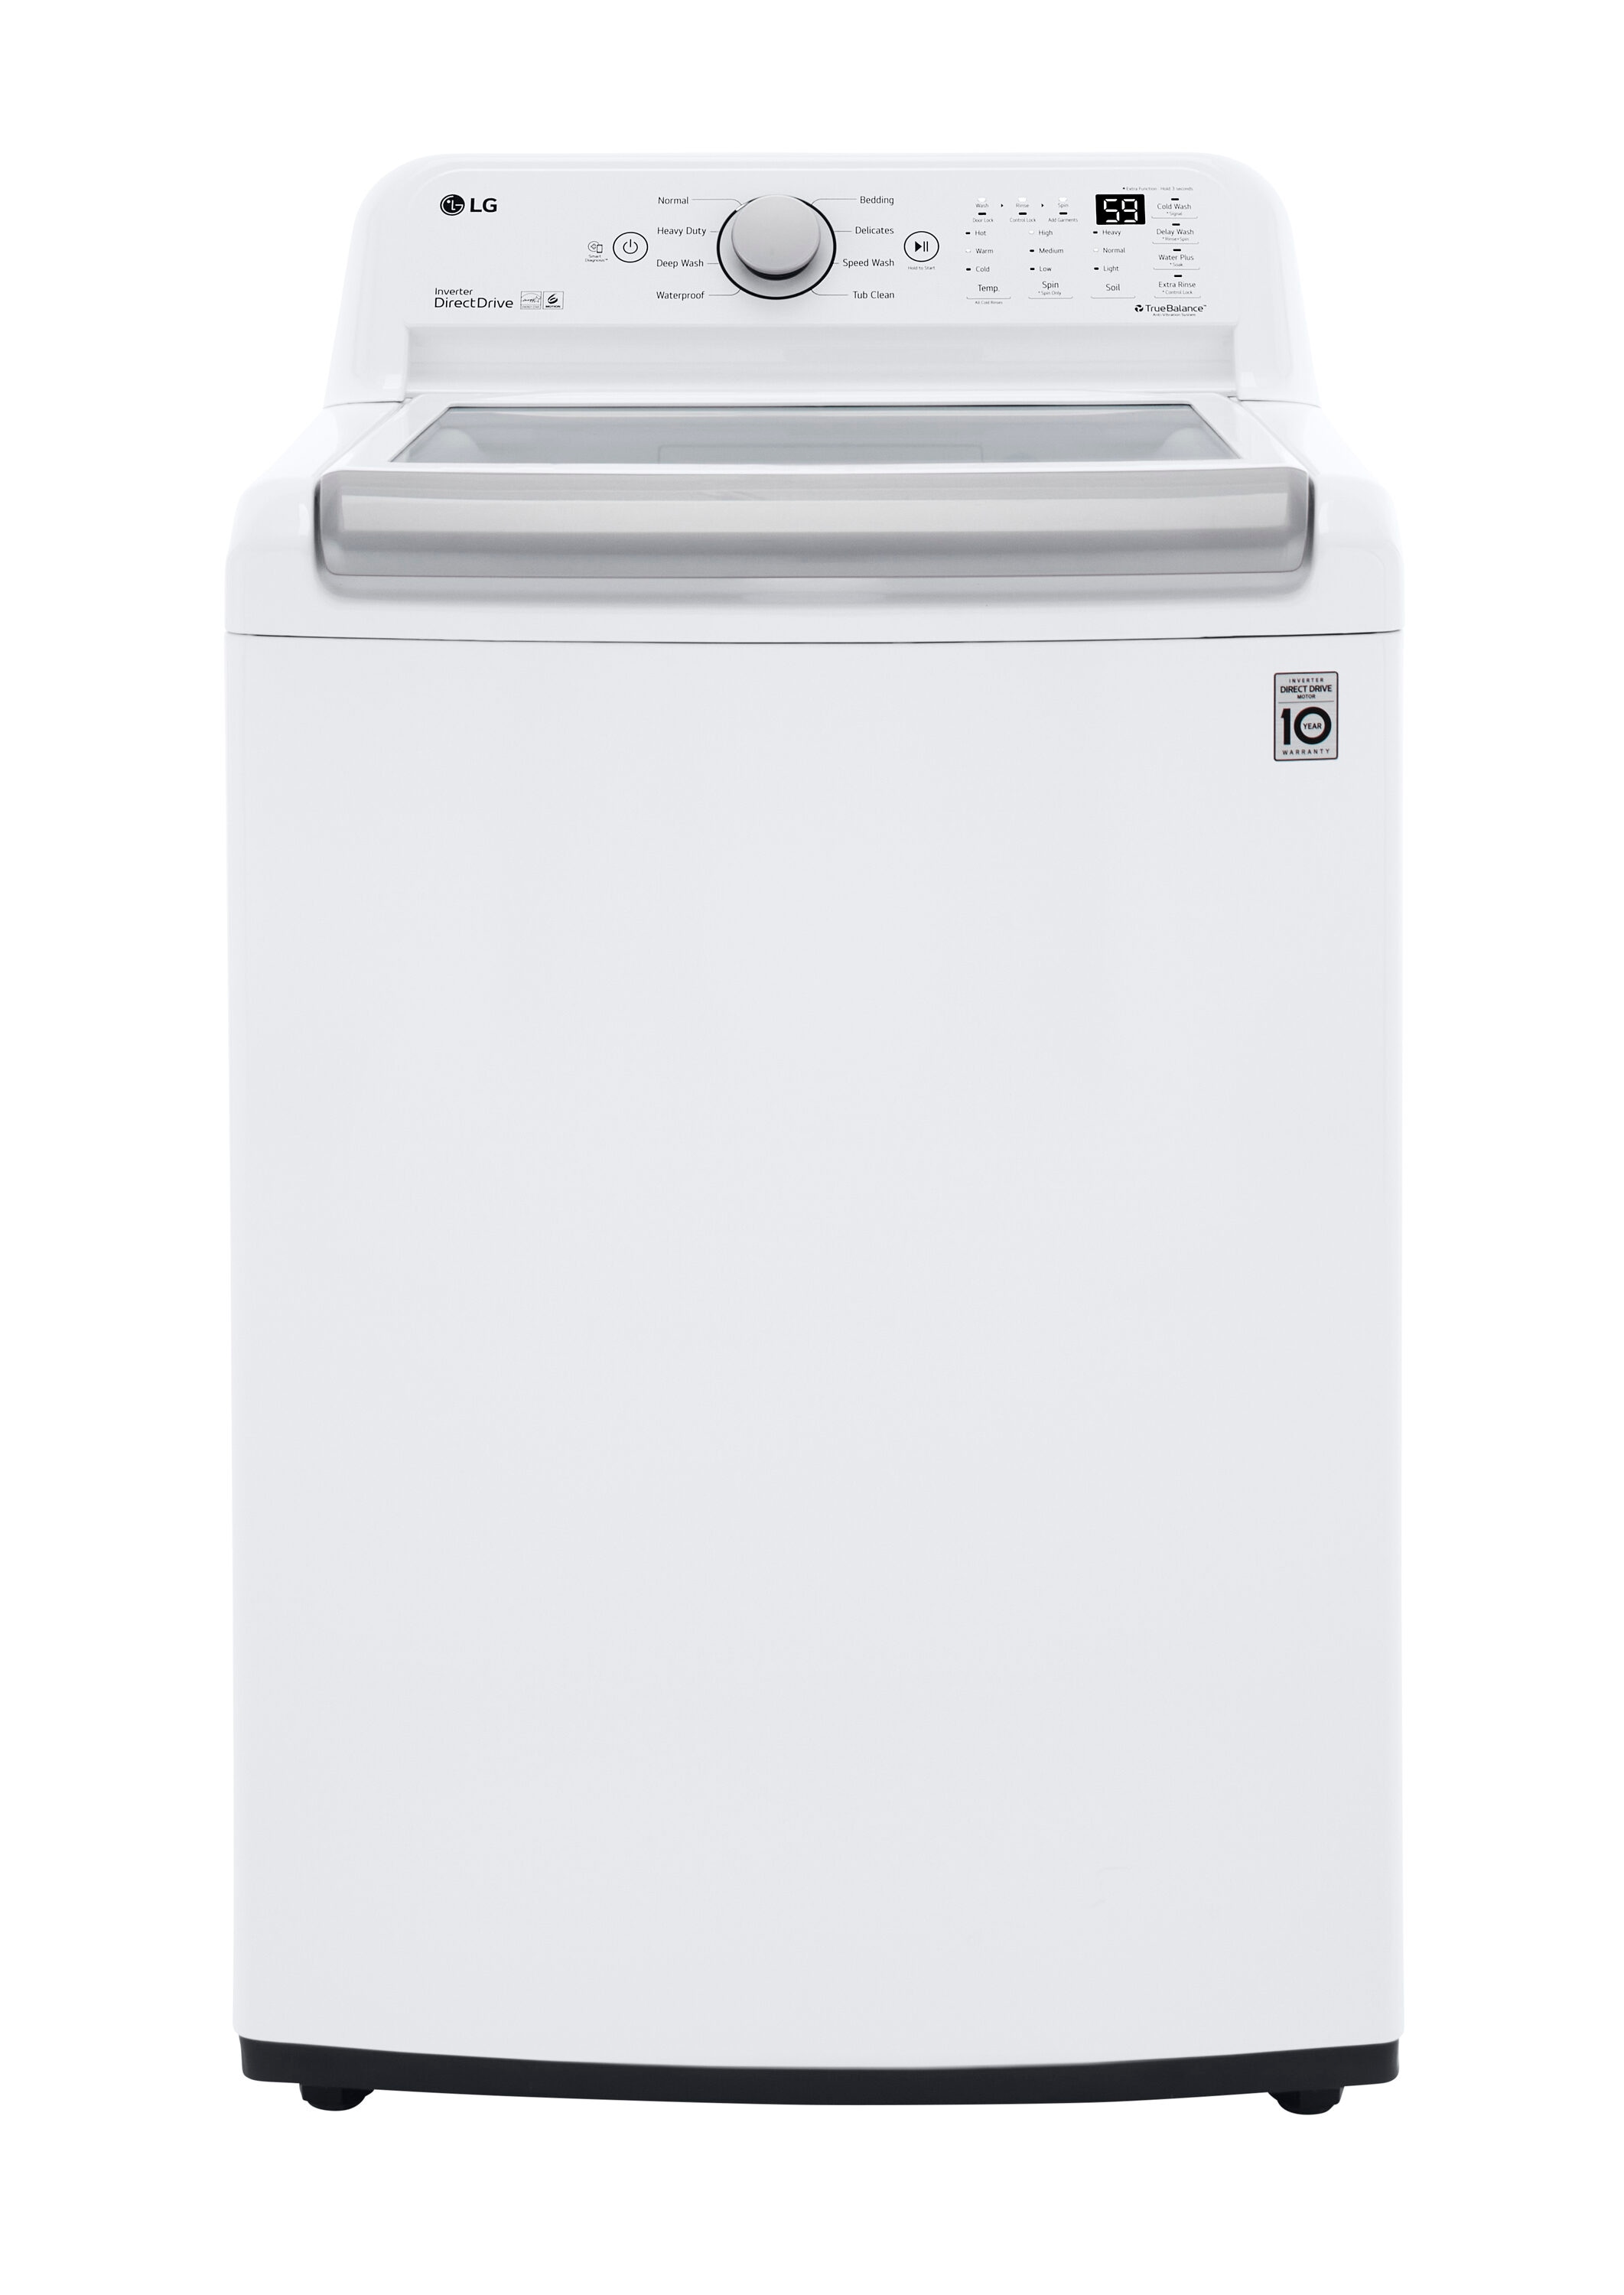 Miniature Mini Refrigerator Ice Box Washing Machine Washer Model